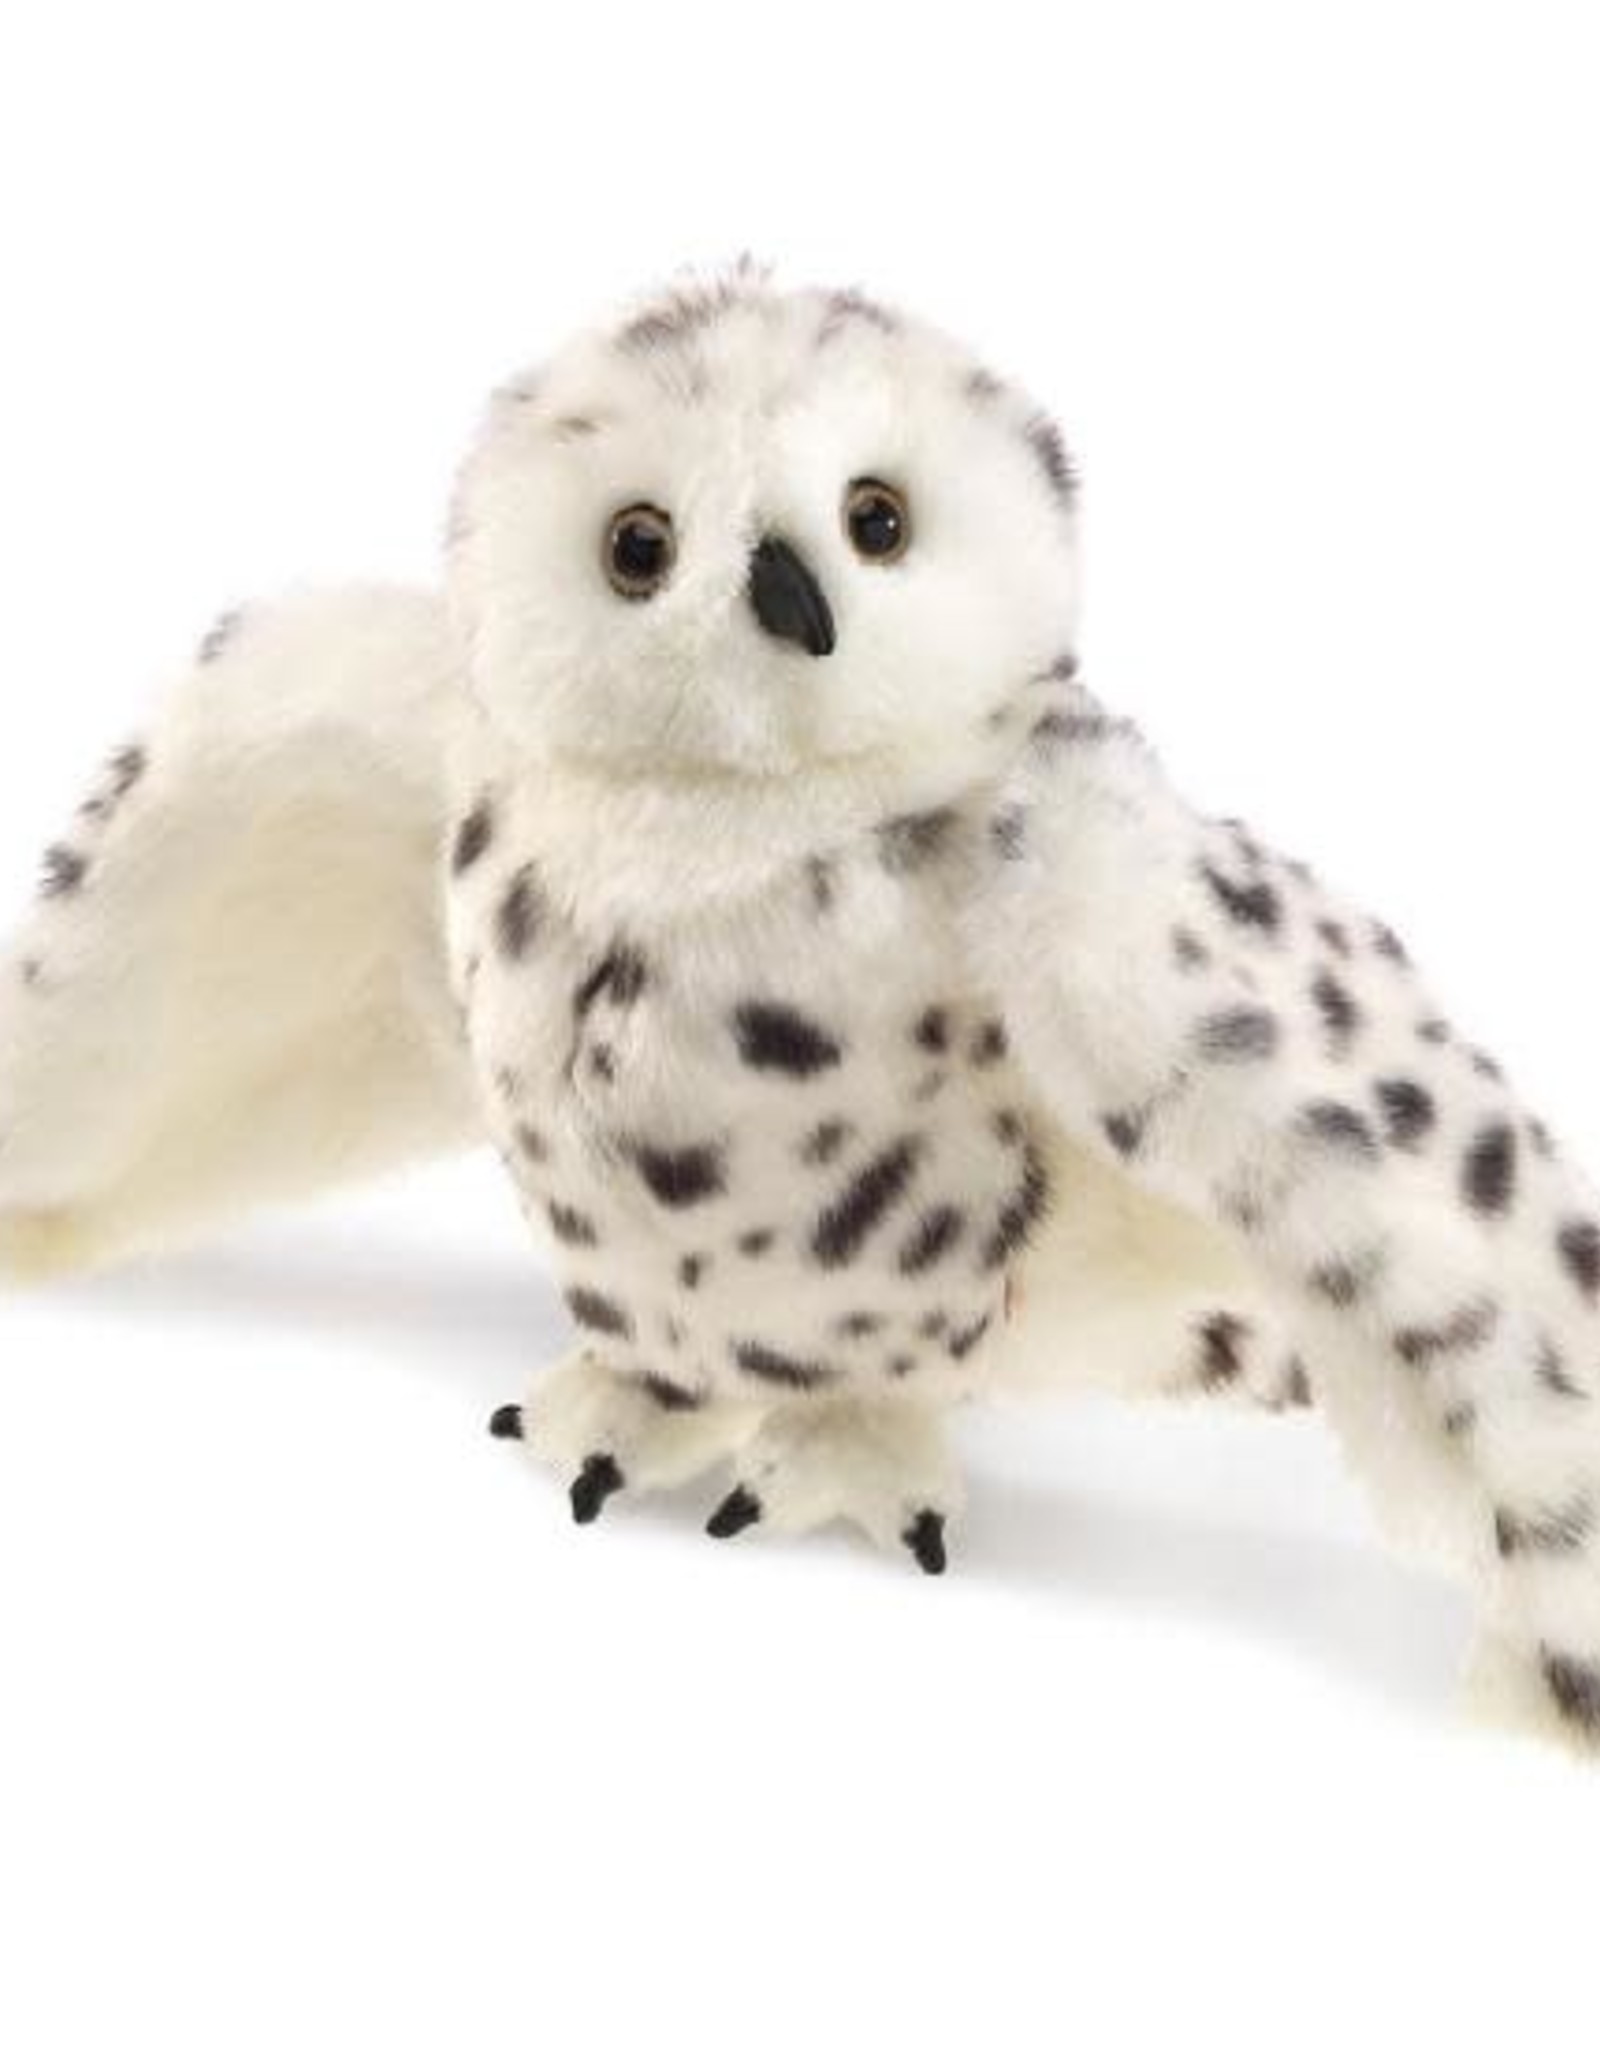 FOLKMANIS Snowy Owl Puppet